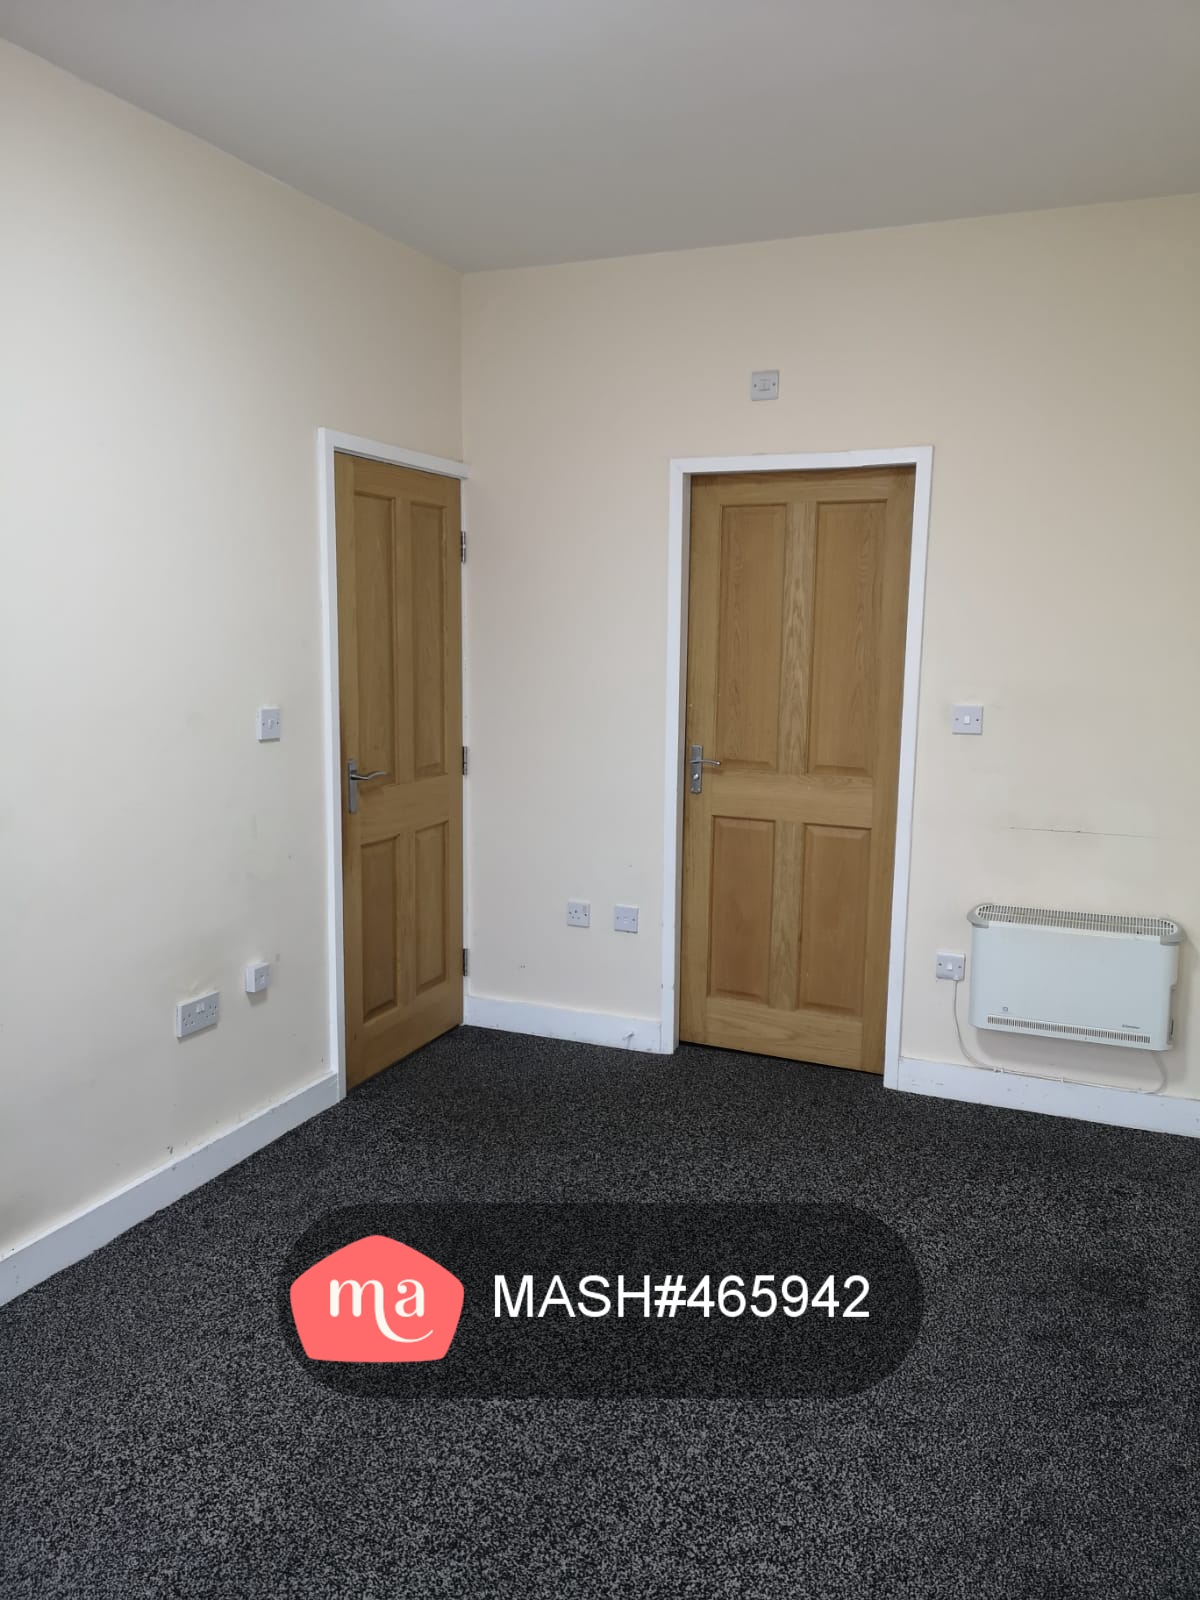 1 Bedroom Flat to rent in Keighley - Mashroom